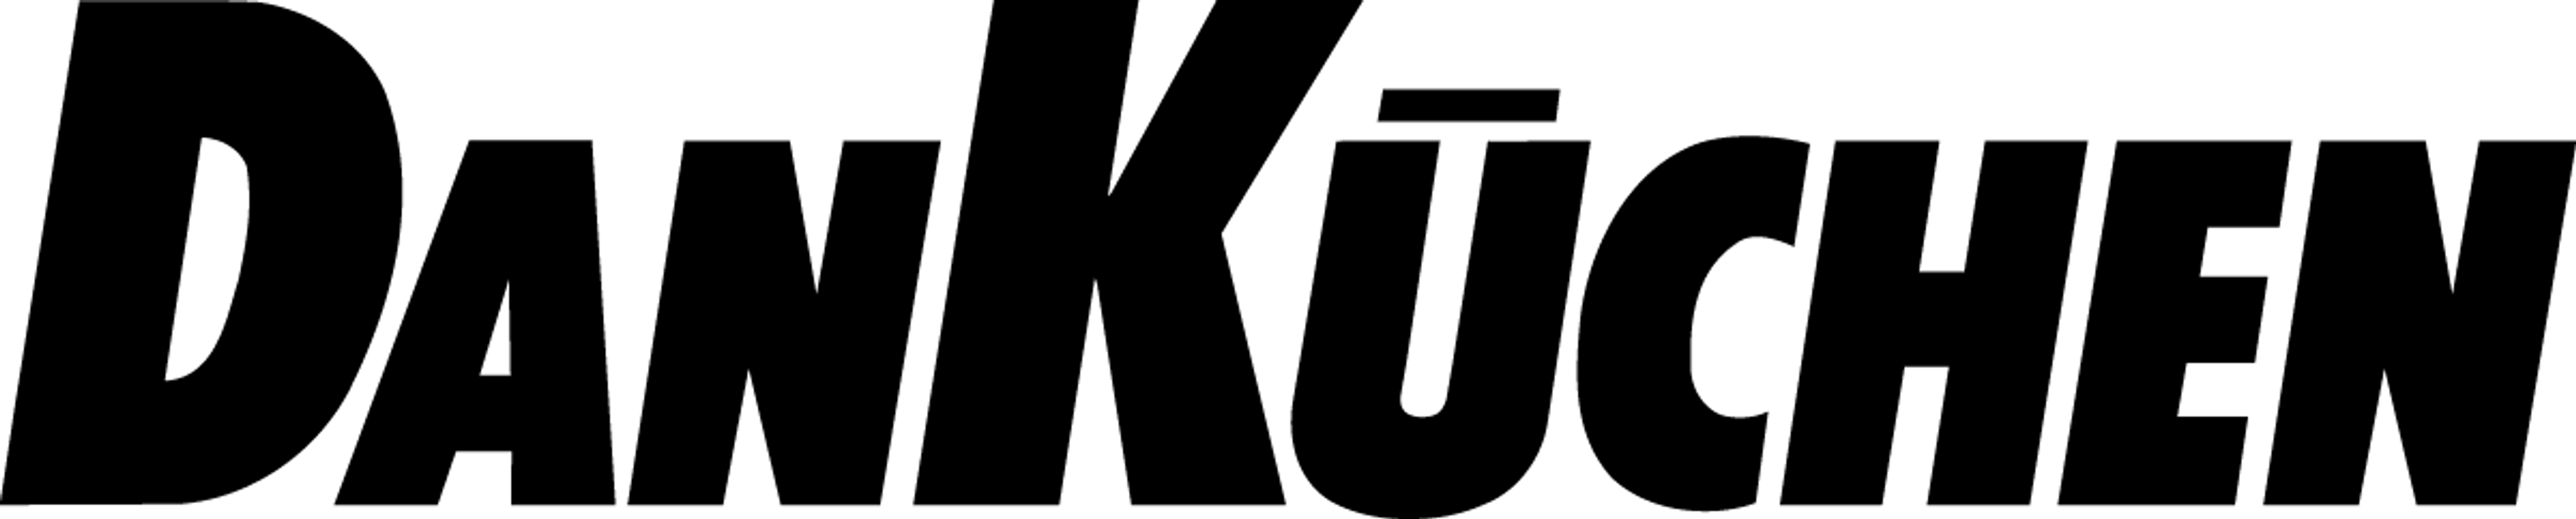 DAN KÜCHEN logo